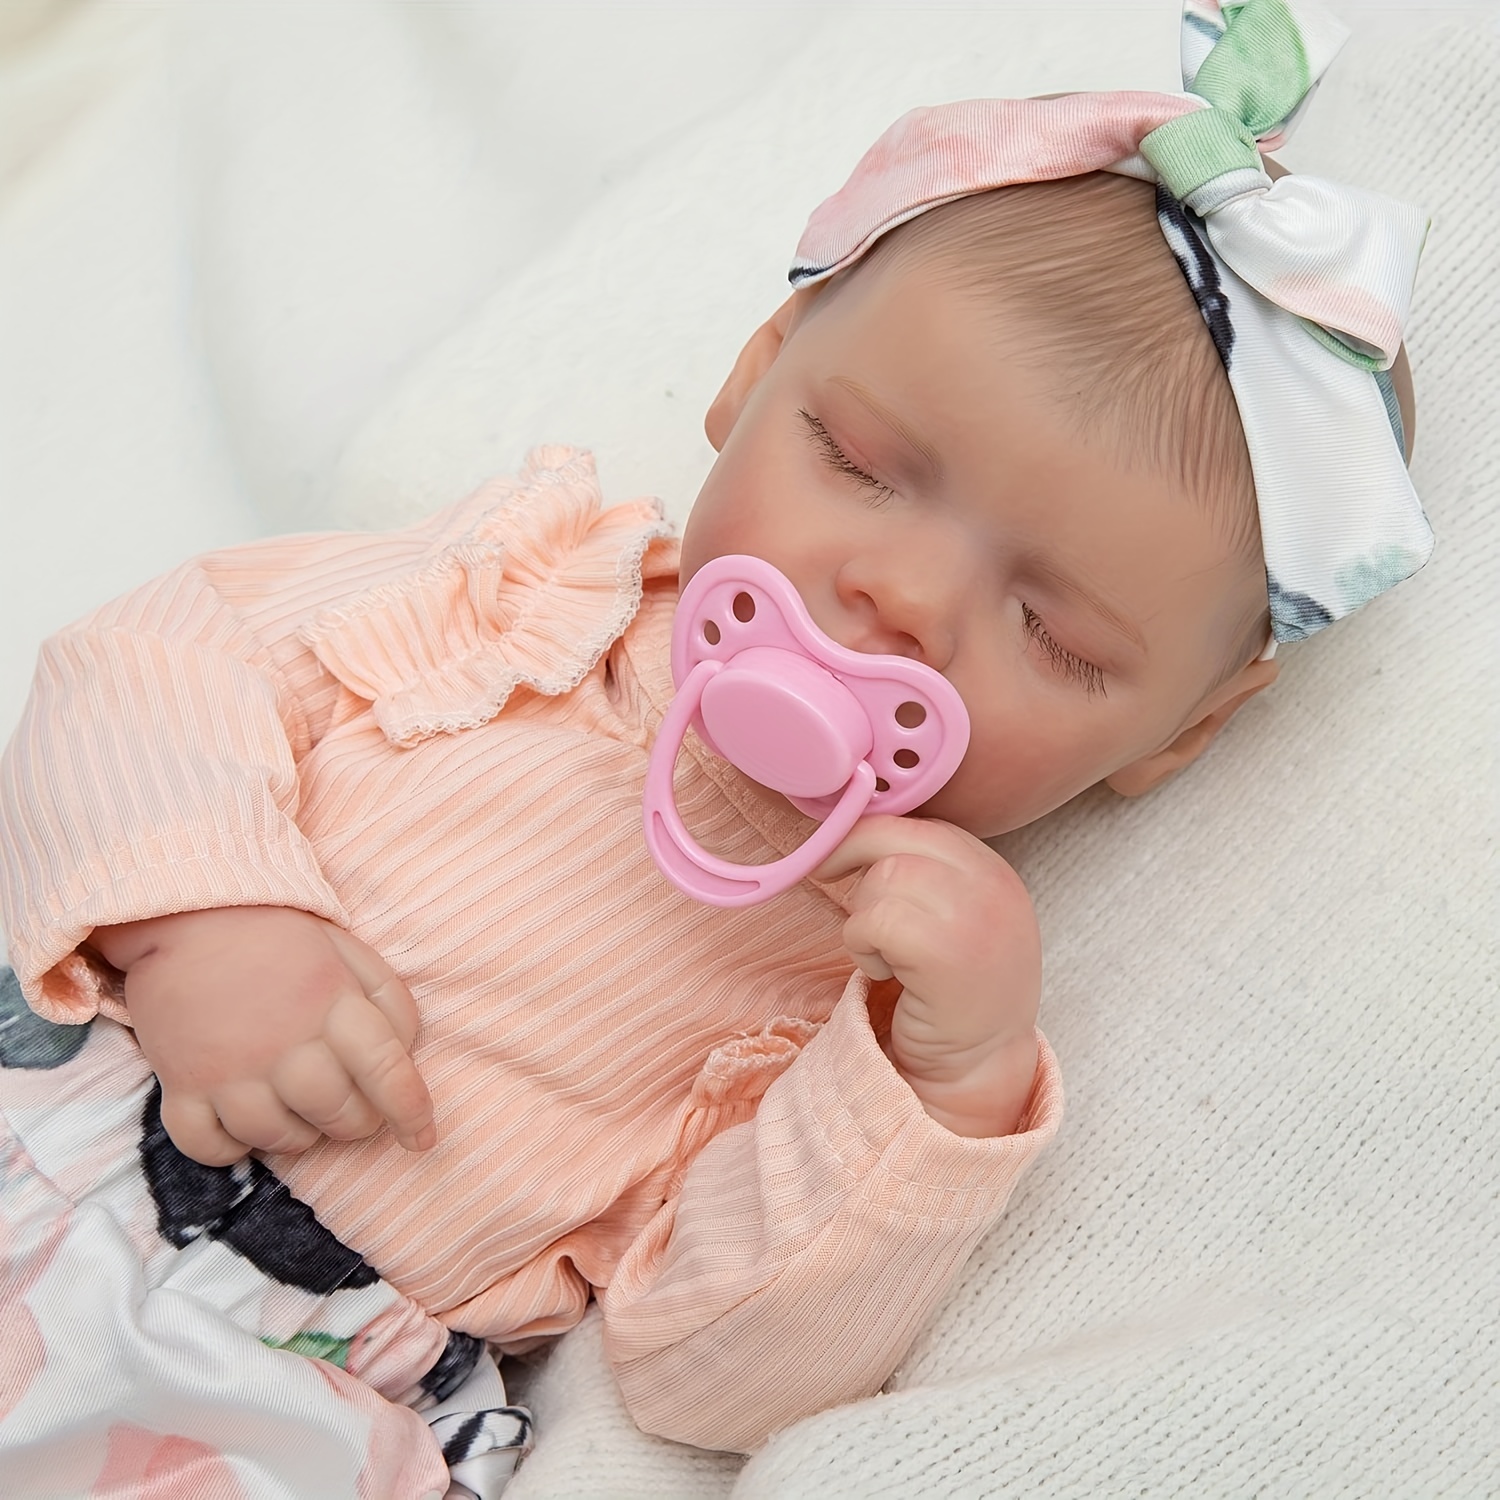 Reborn Realistic Newborn Baby Dolls, 18 inch Silicone Real Toddler Girl  Lifelike